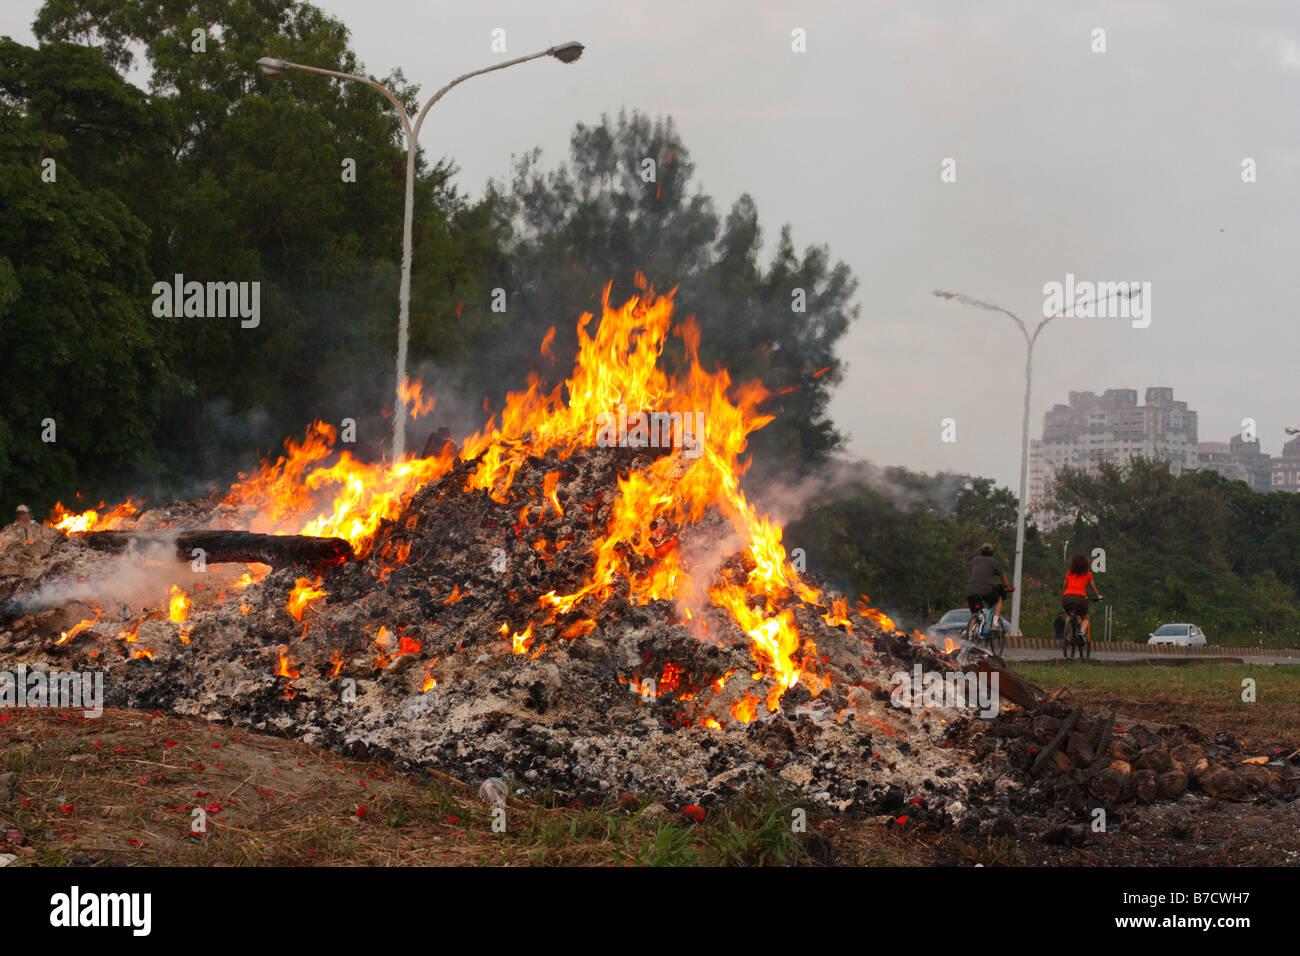 A trash fire burning. Stock Photo